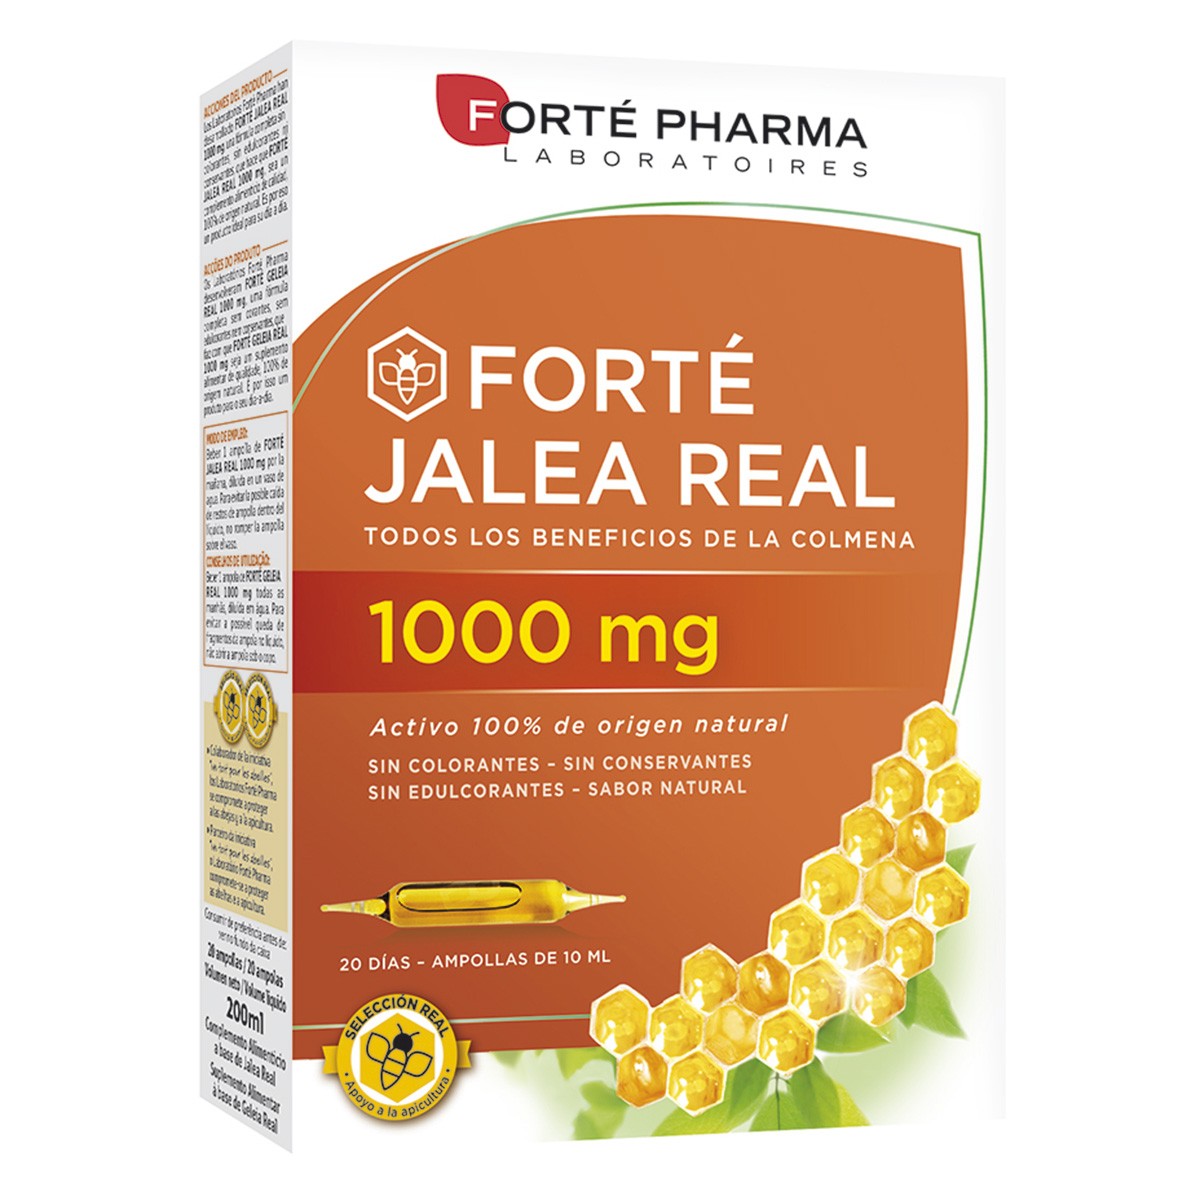 Forte pharma jalea real 1000 mg 20 ampollas